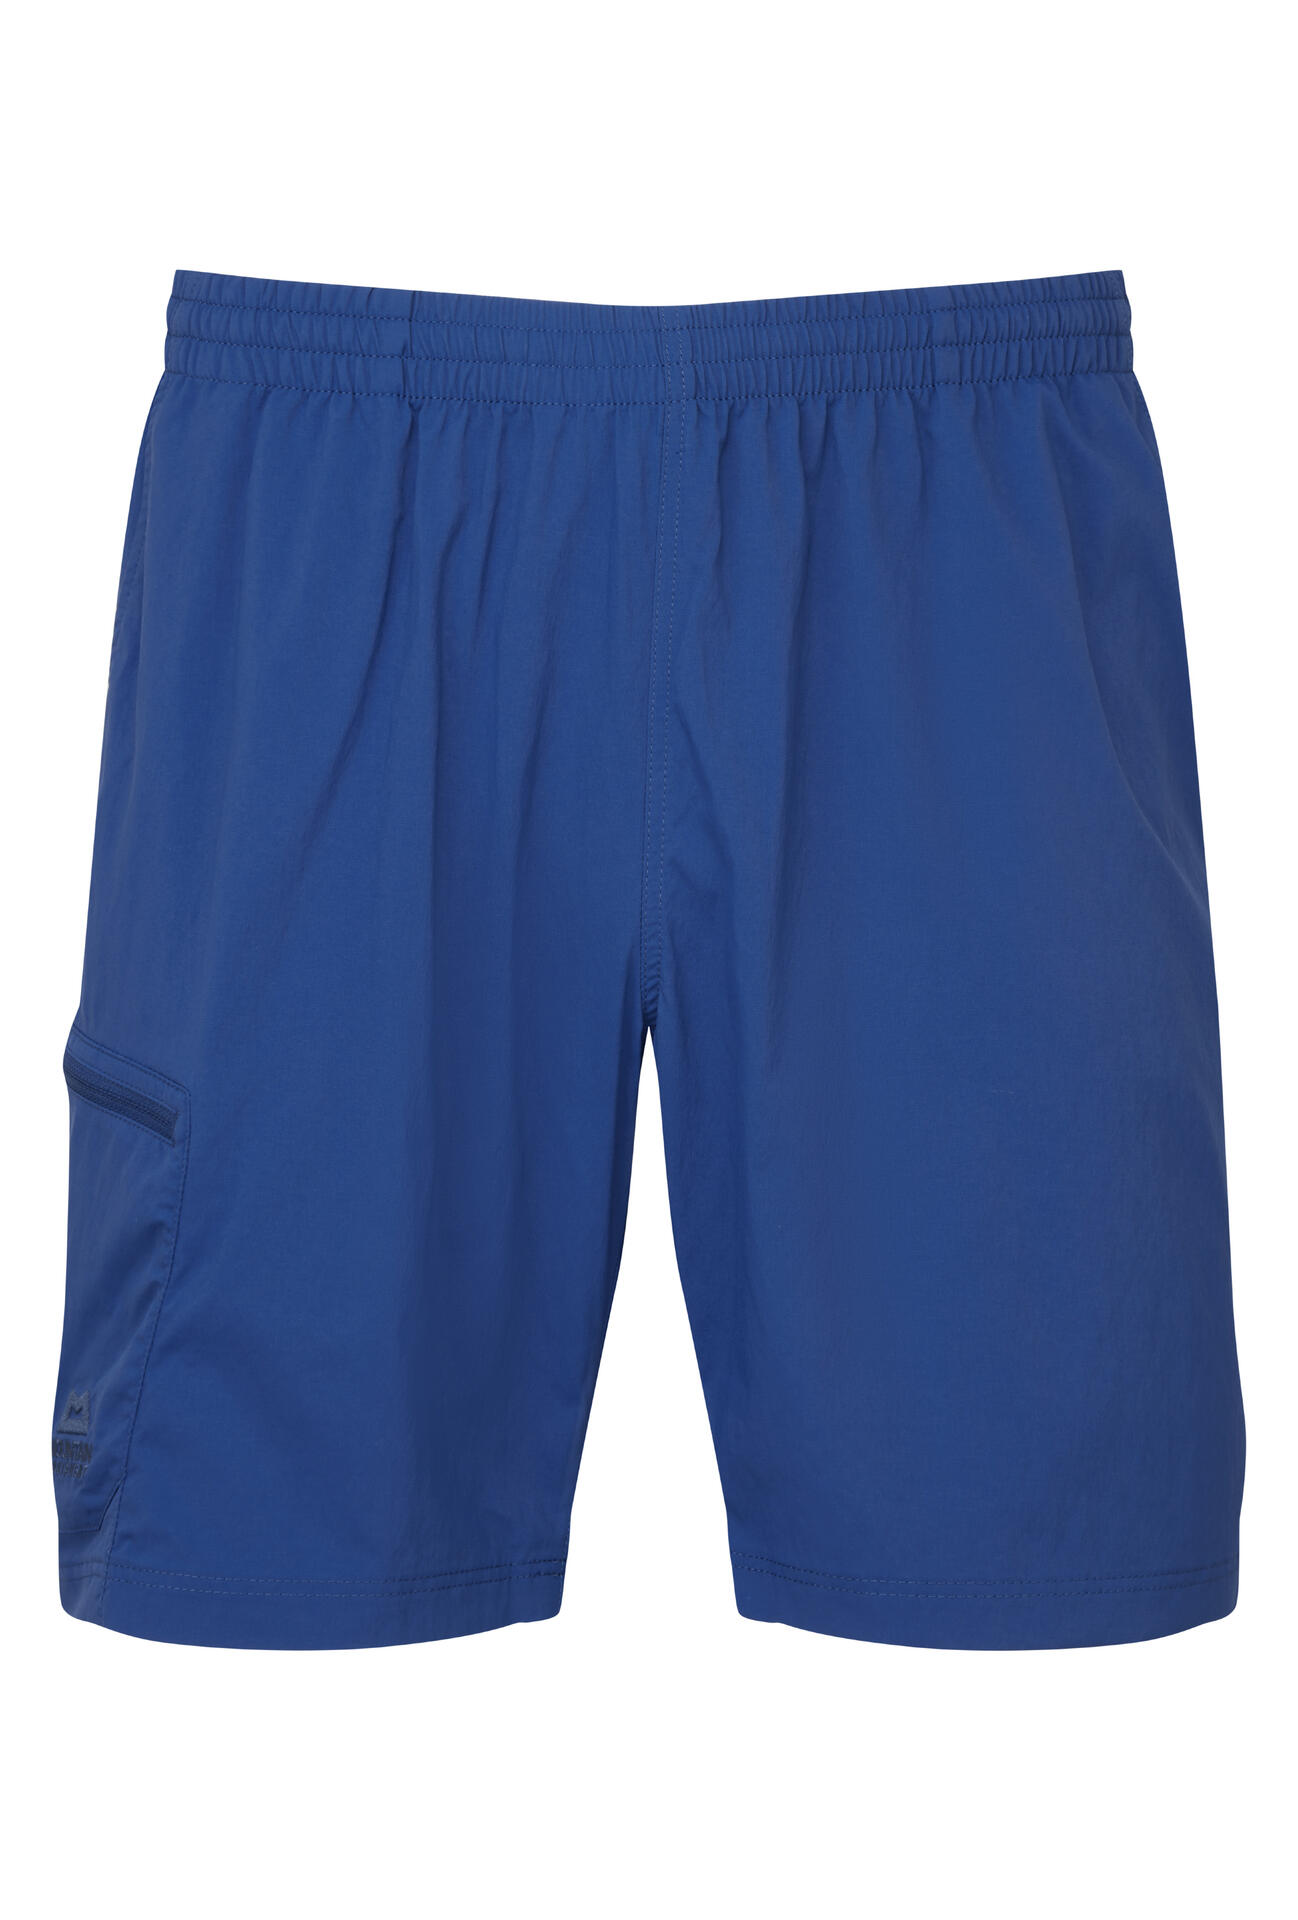 Mountain Equipment Dynamo Short Men'S Barva: admiral blue, Velikost: XL